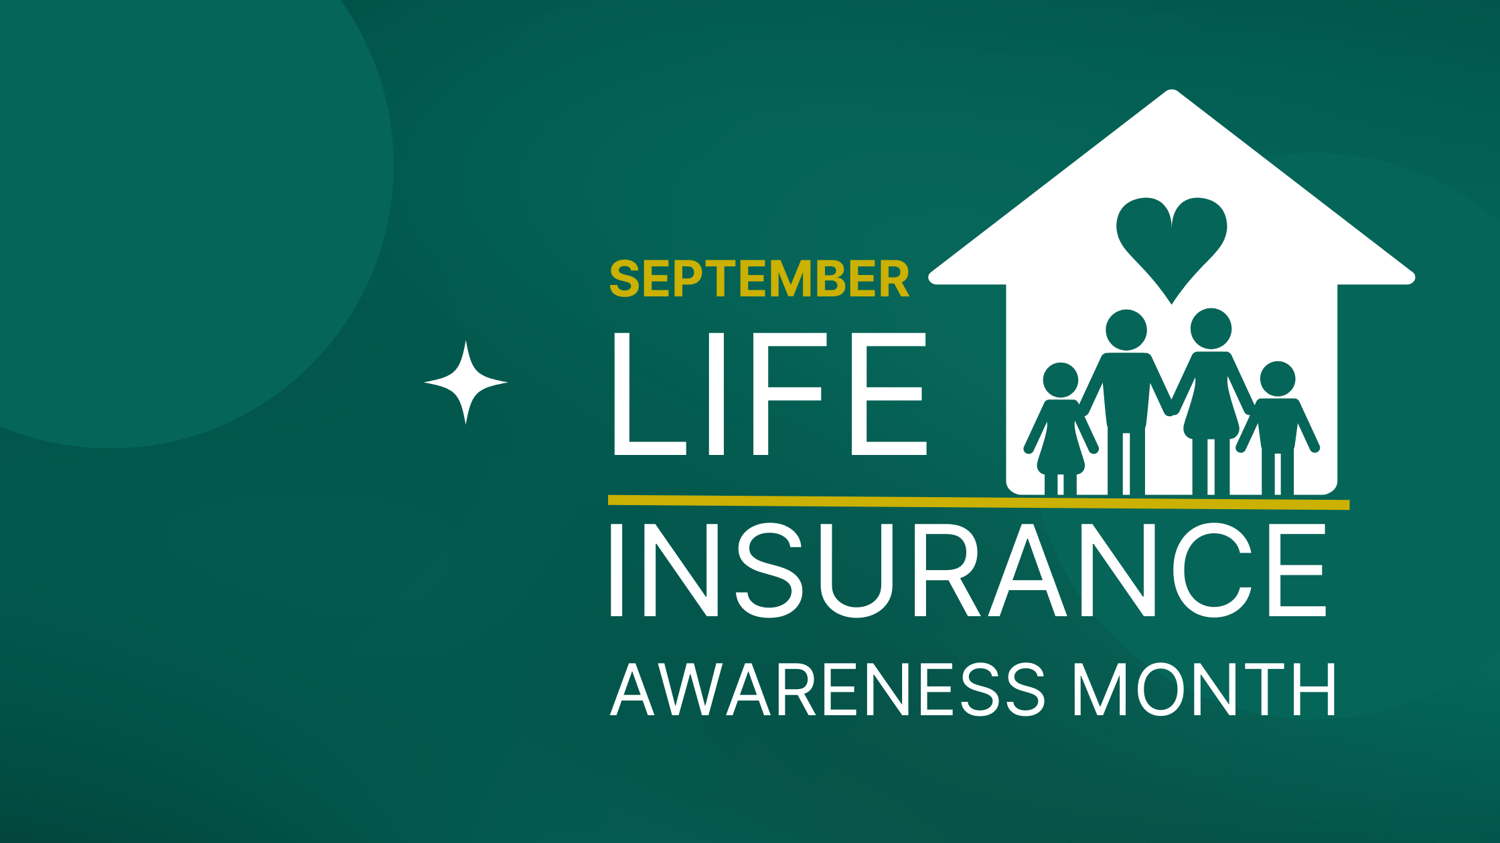 September is life insurance awareness month